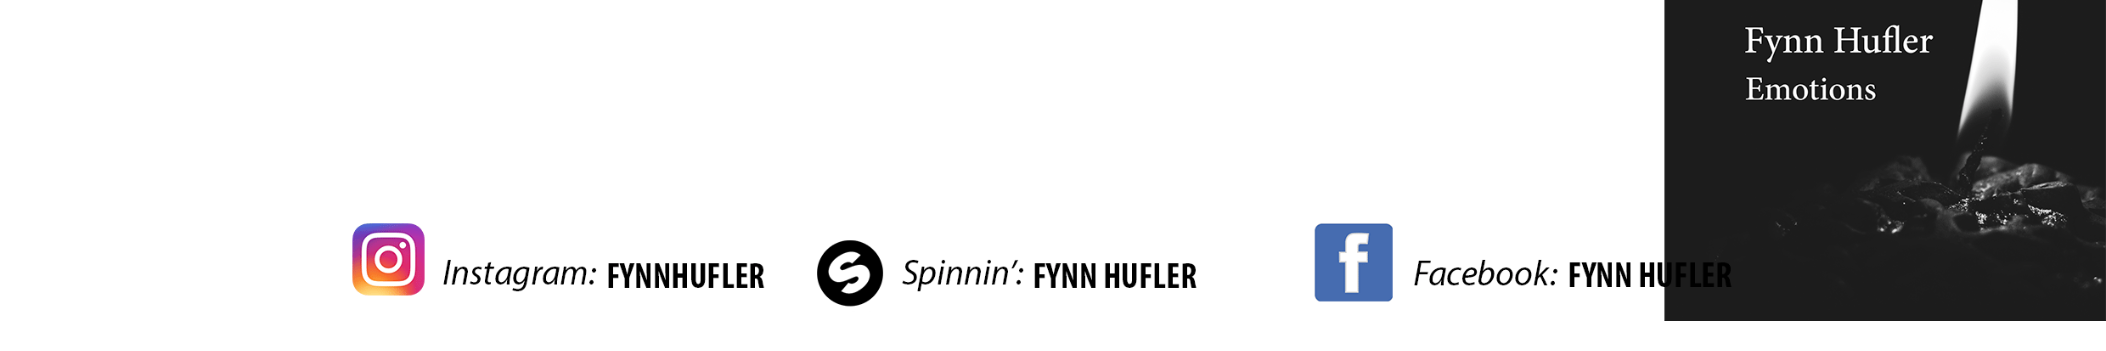 Fynn Hufler